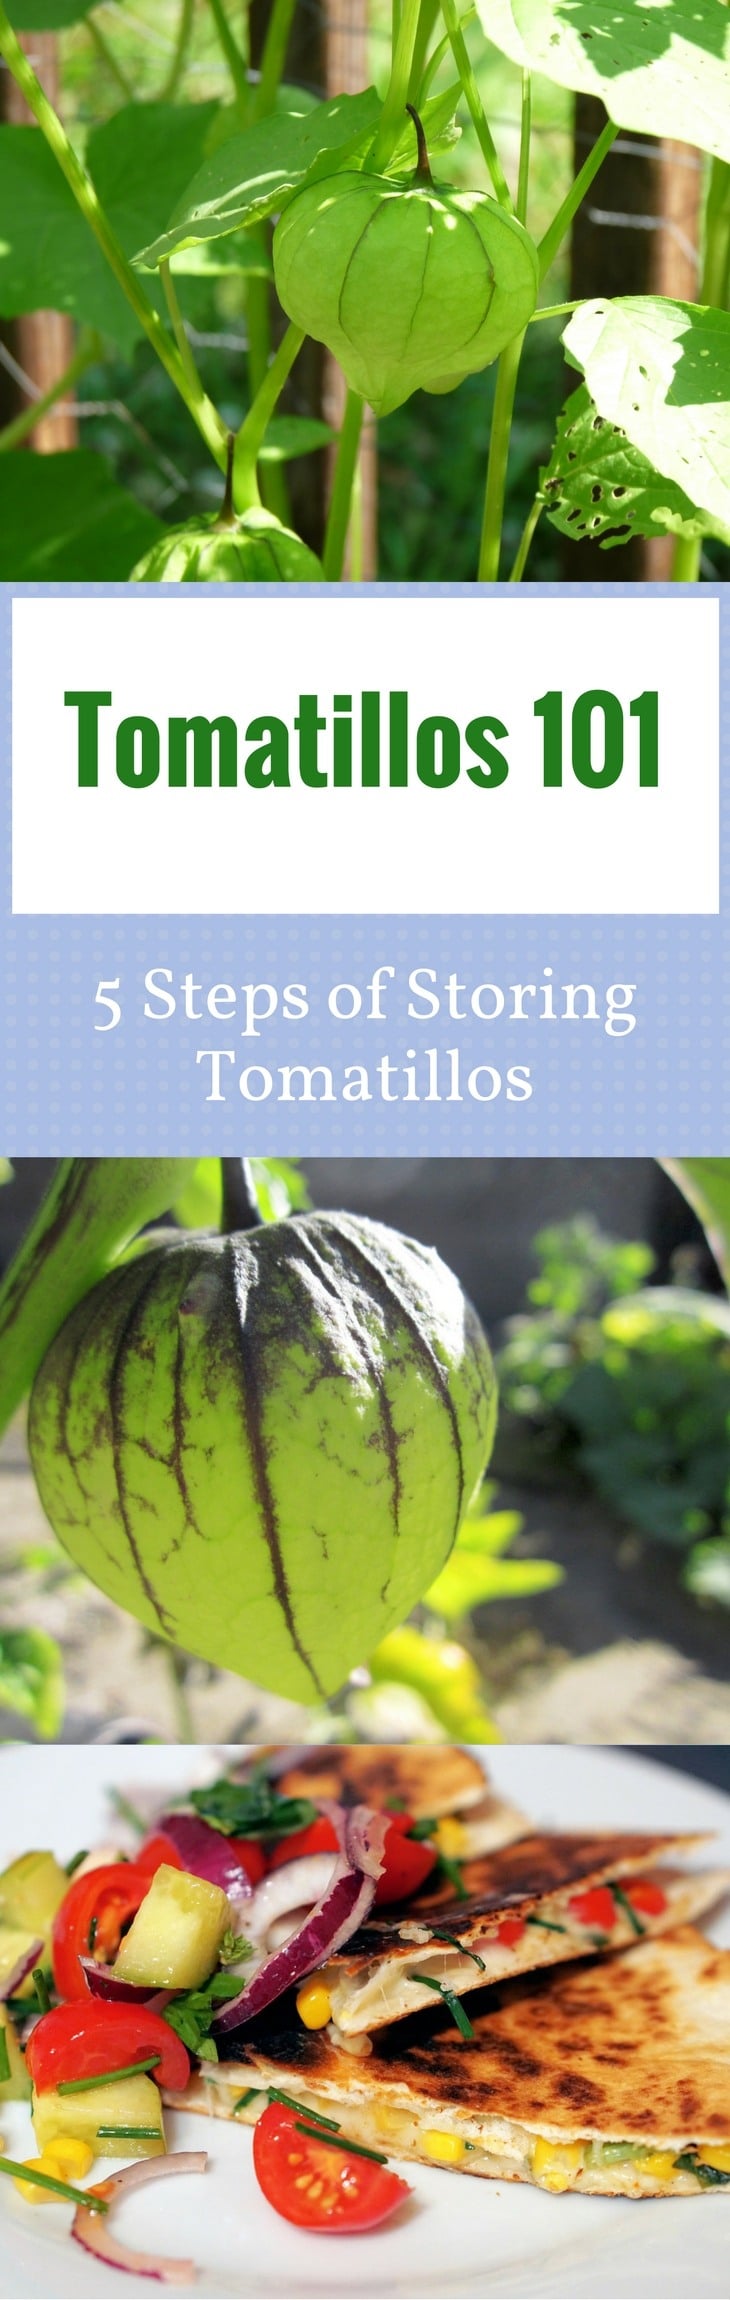 Tomatillos 101- 5 Steps of Storing Tomatillos